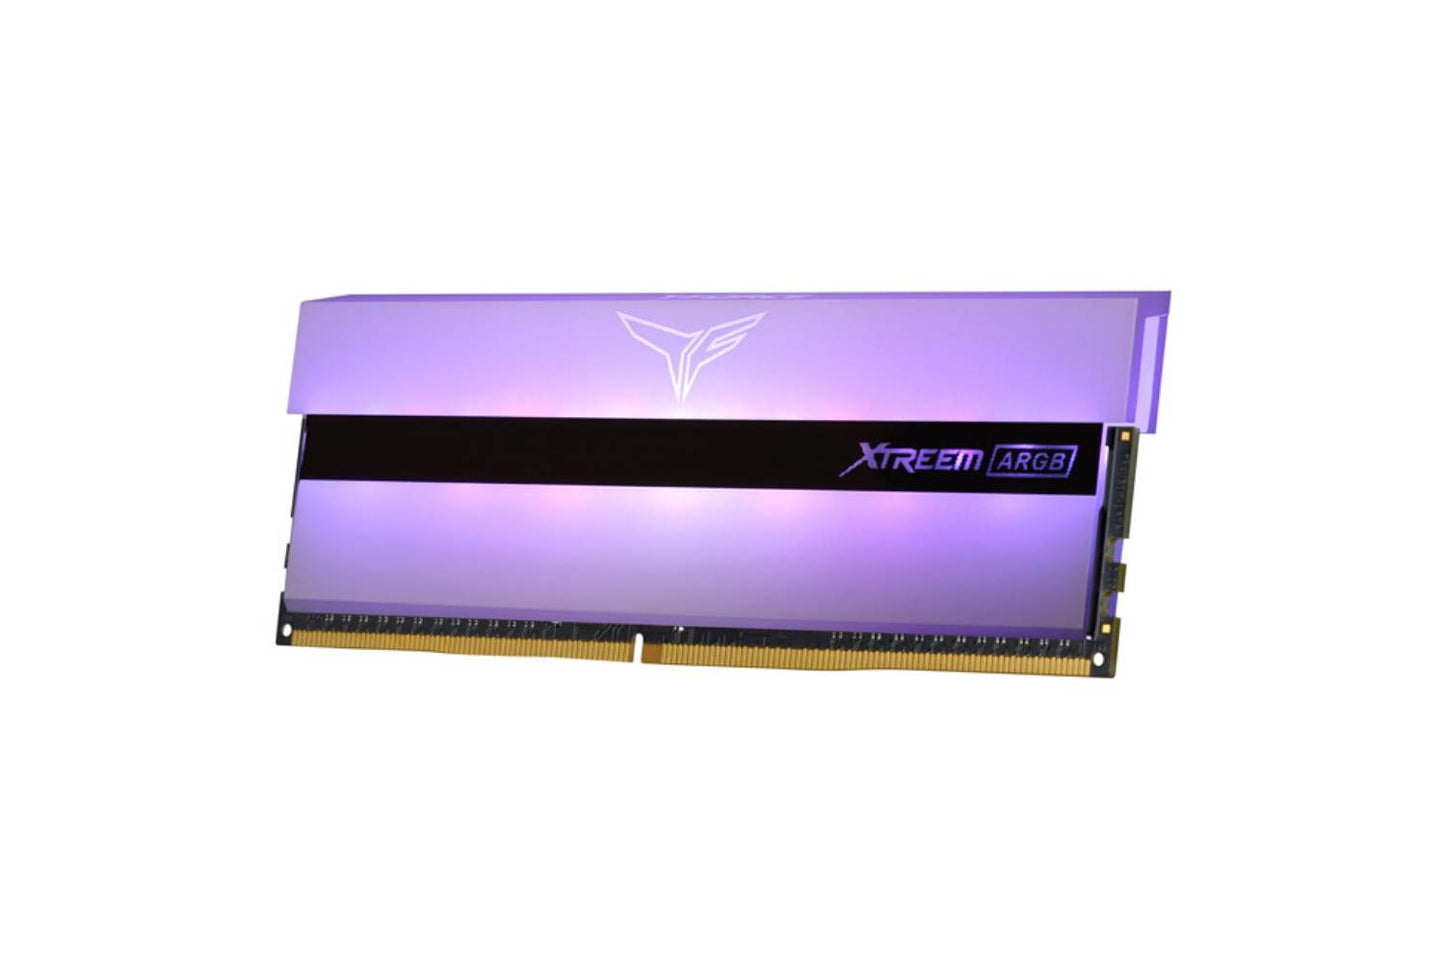 TEAMGROUP XTREEM ARGB DDR4 3200Mhz 16GB (8GB x 2) CL16 Gaming Memory